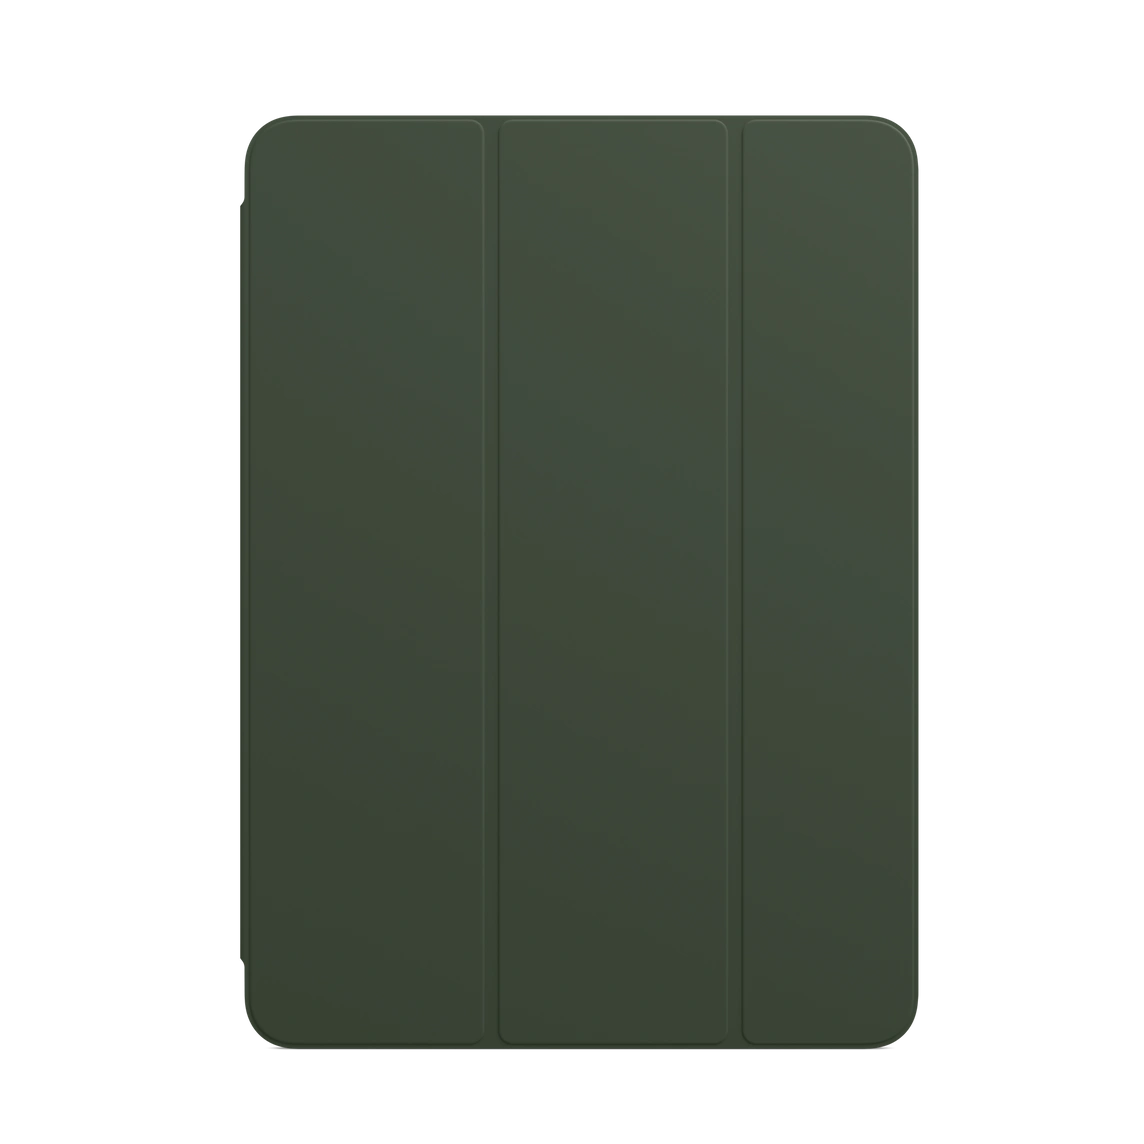 HC Smart Folio for iPad Air (4th generation)